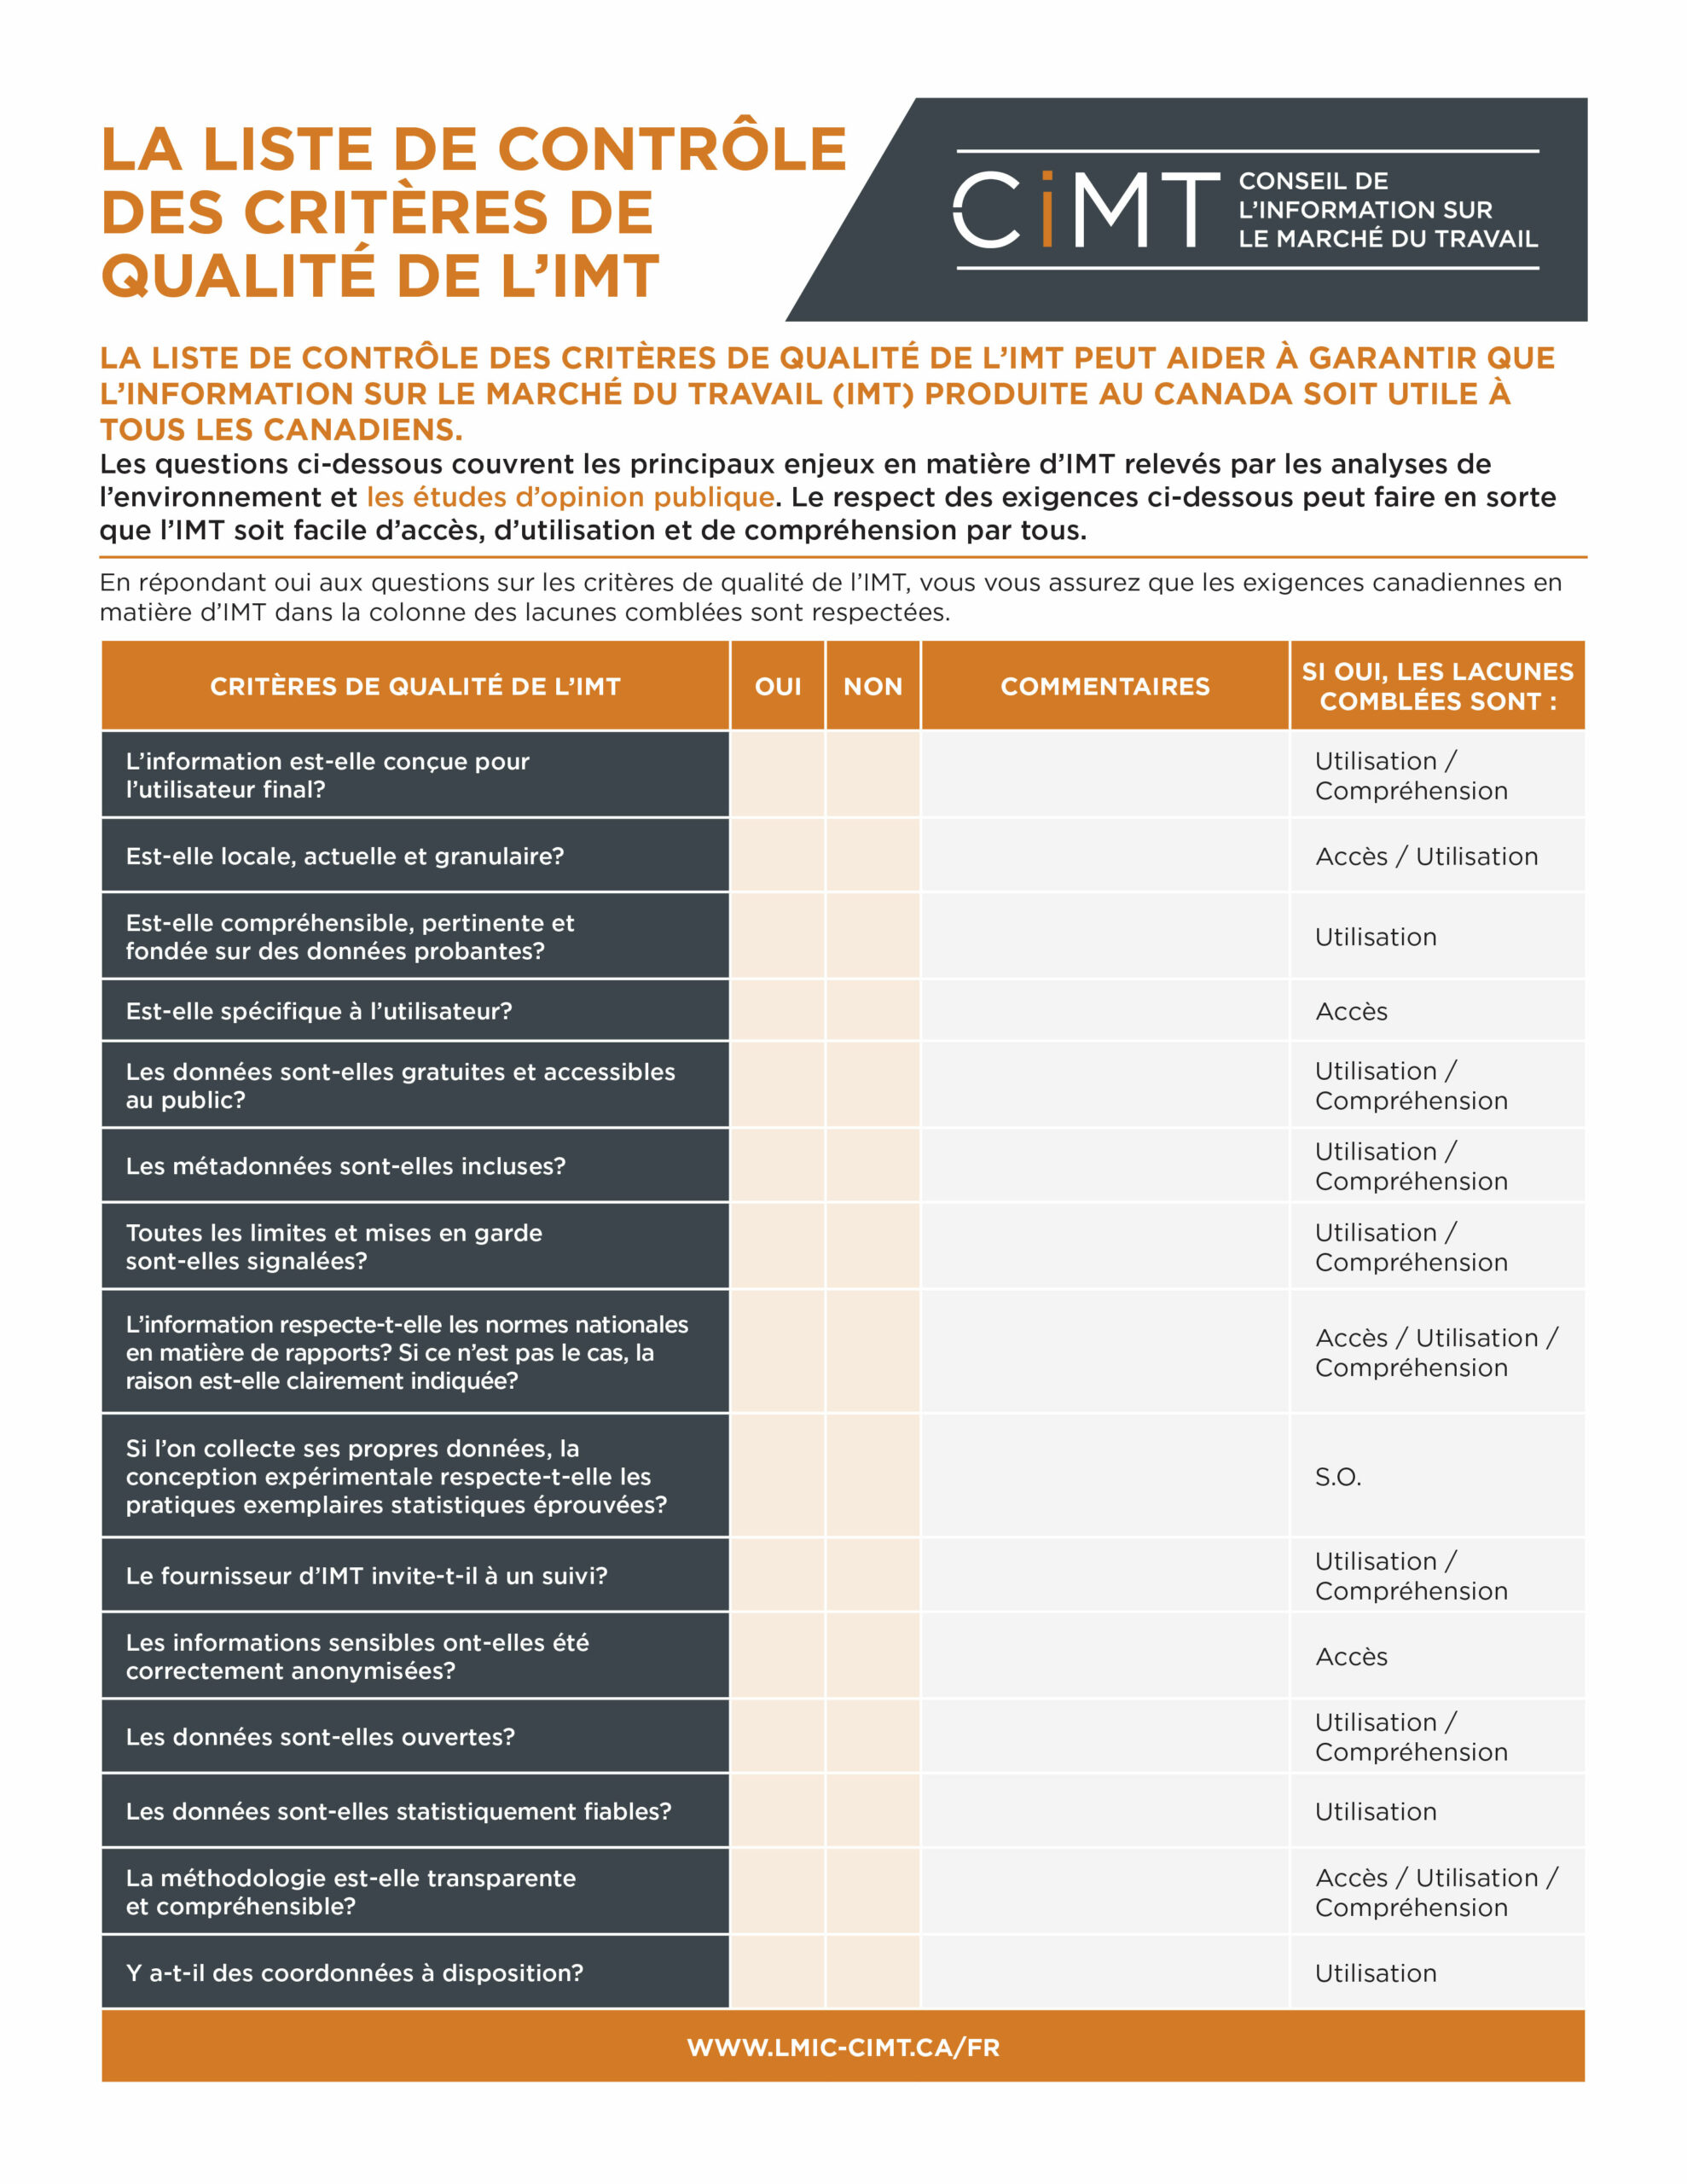 Quality-LMI-Attributes-Checklist-FR-Img